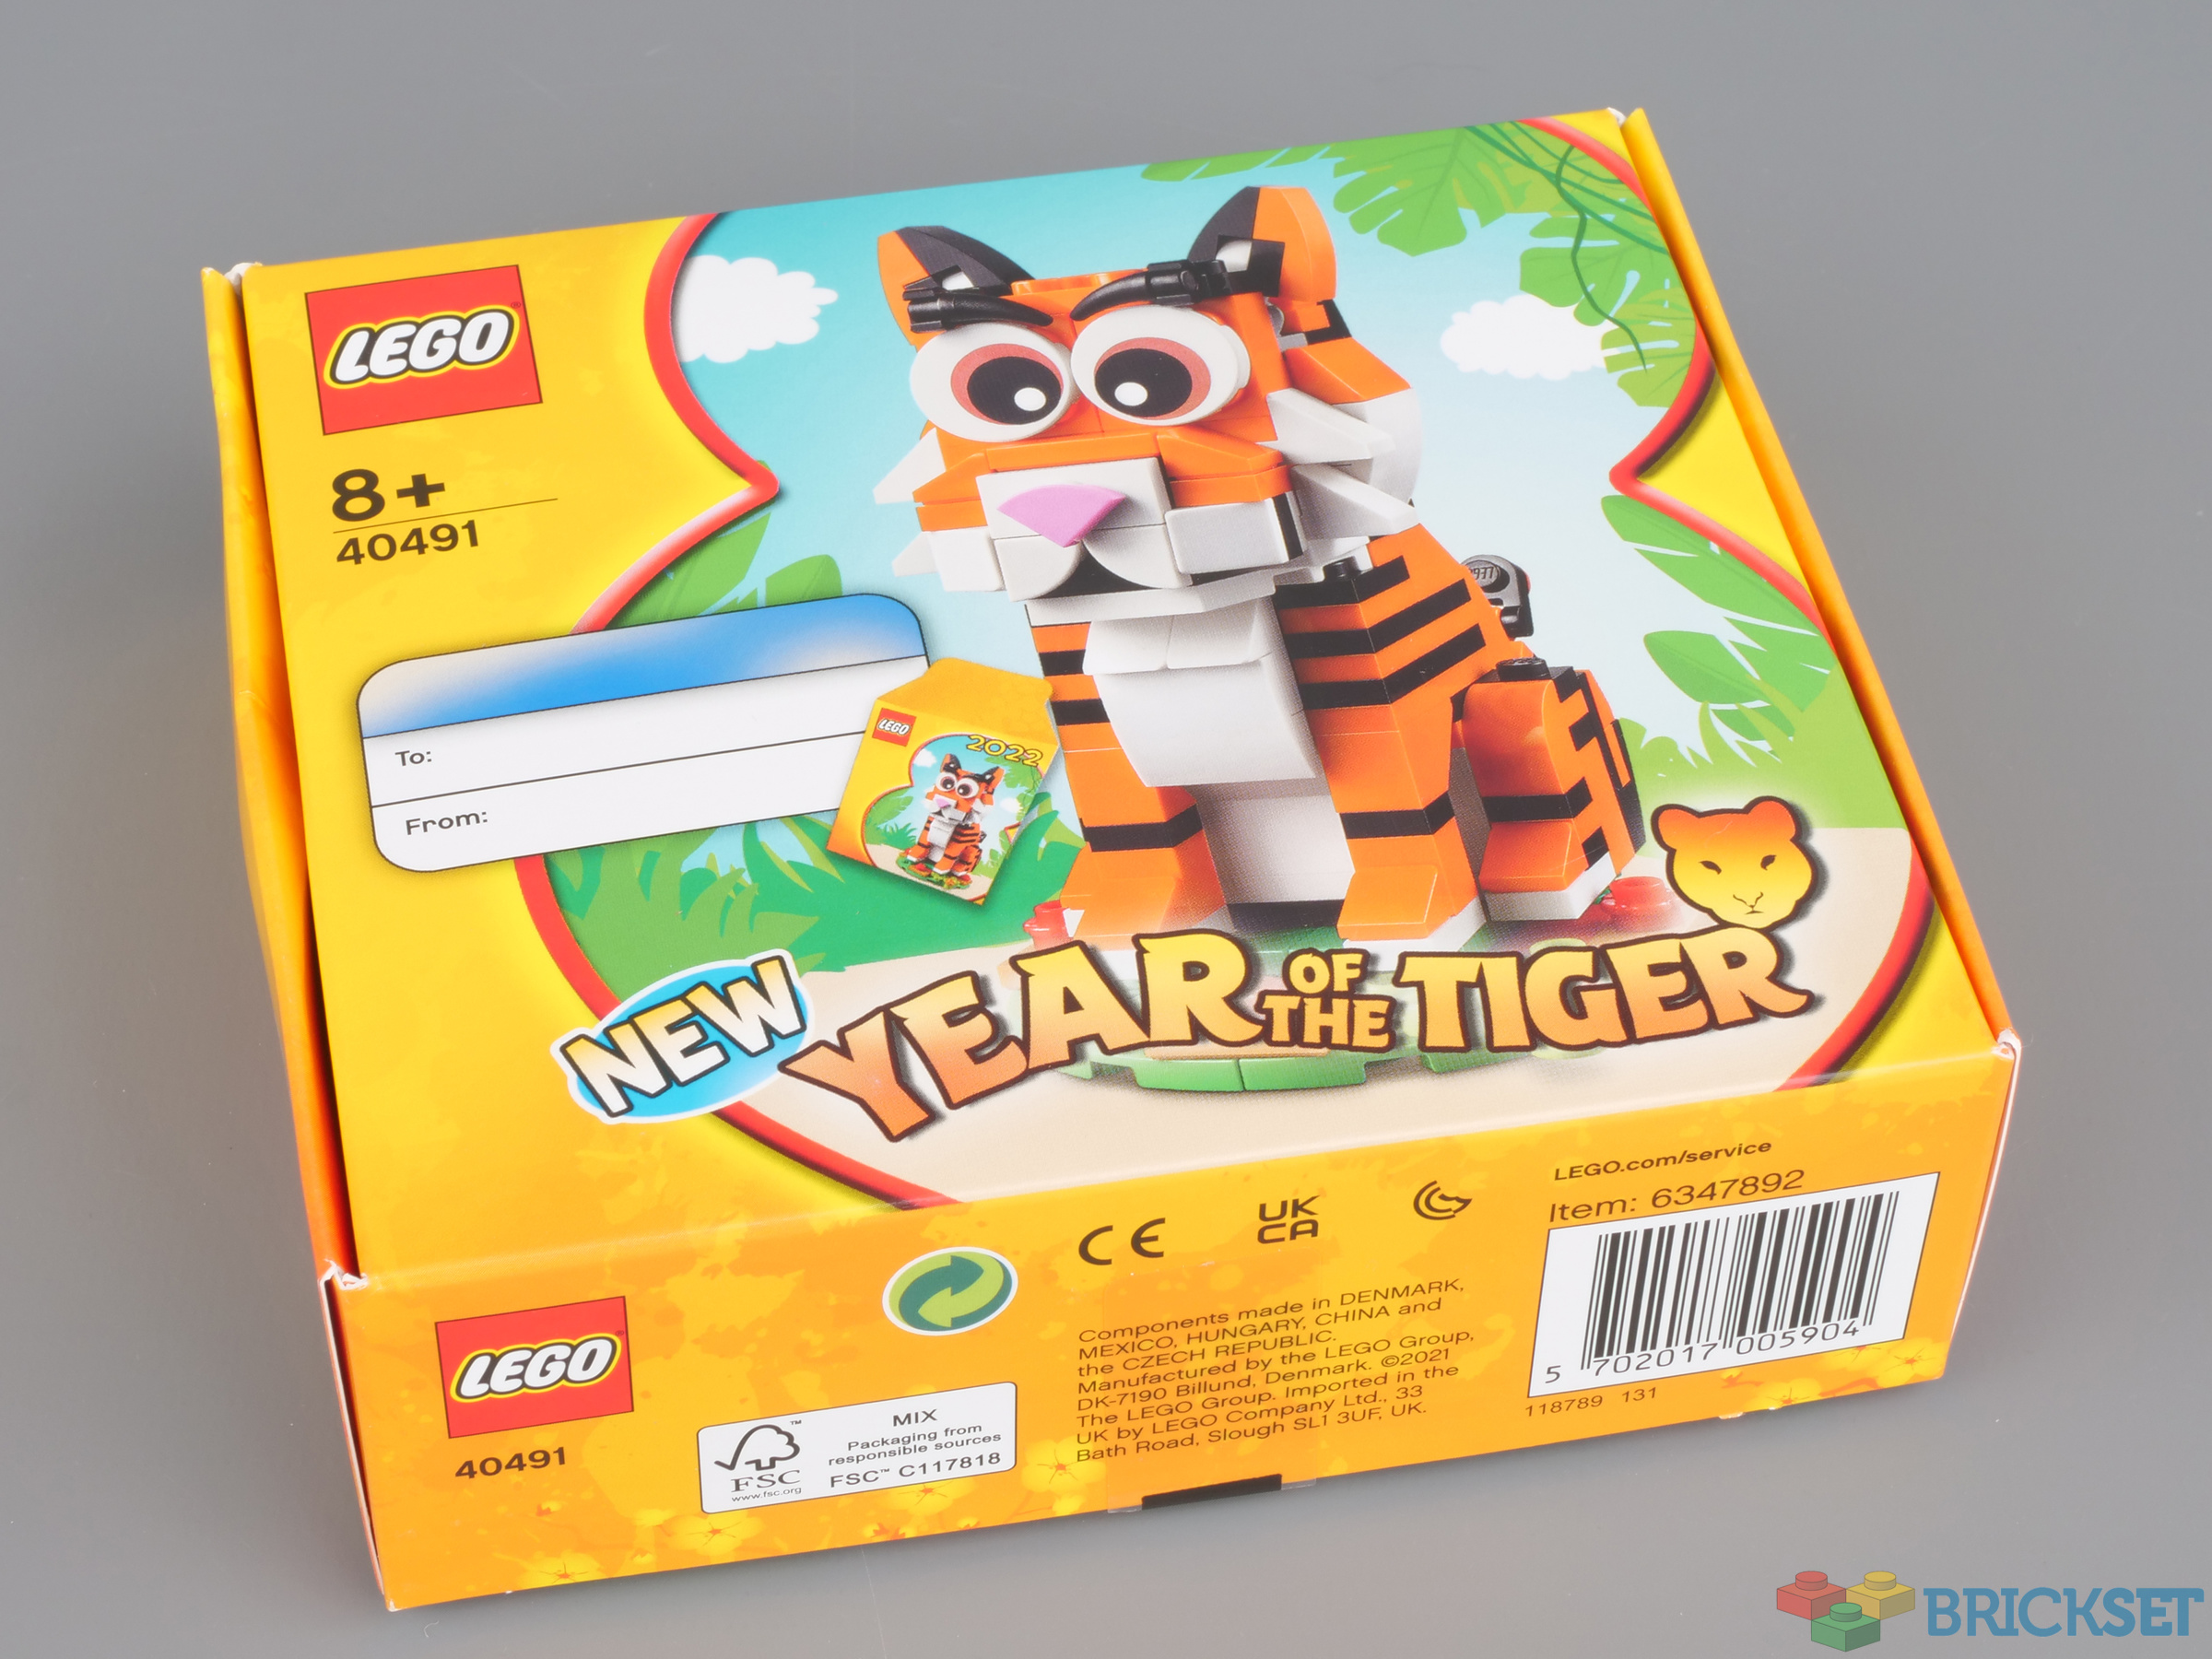 Review: of the Tiger | Brickset: LEGO set guide database